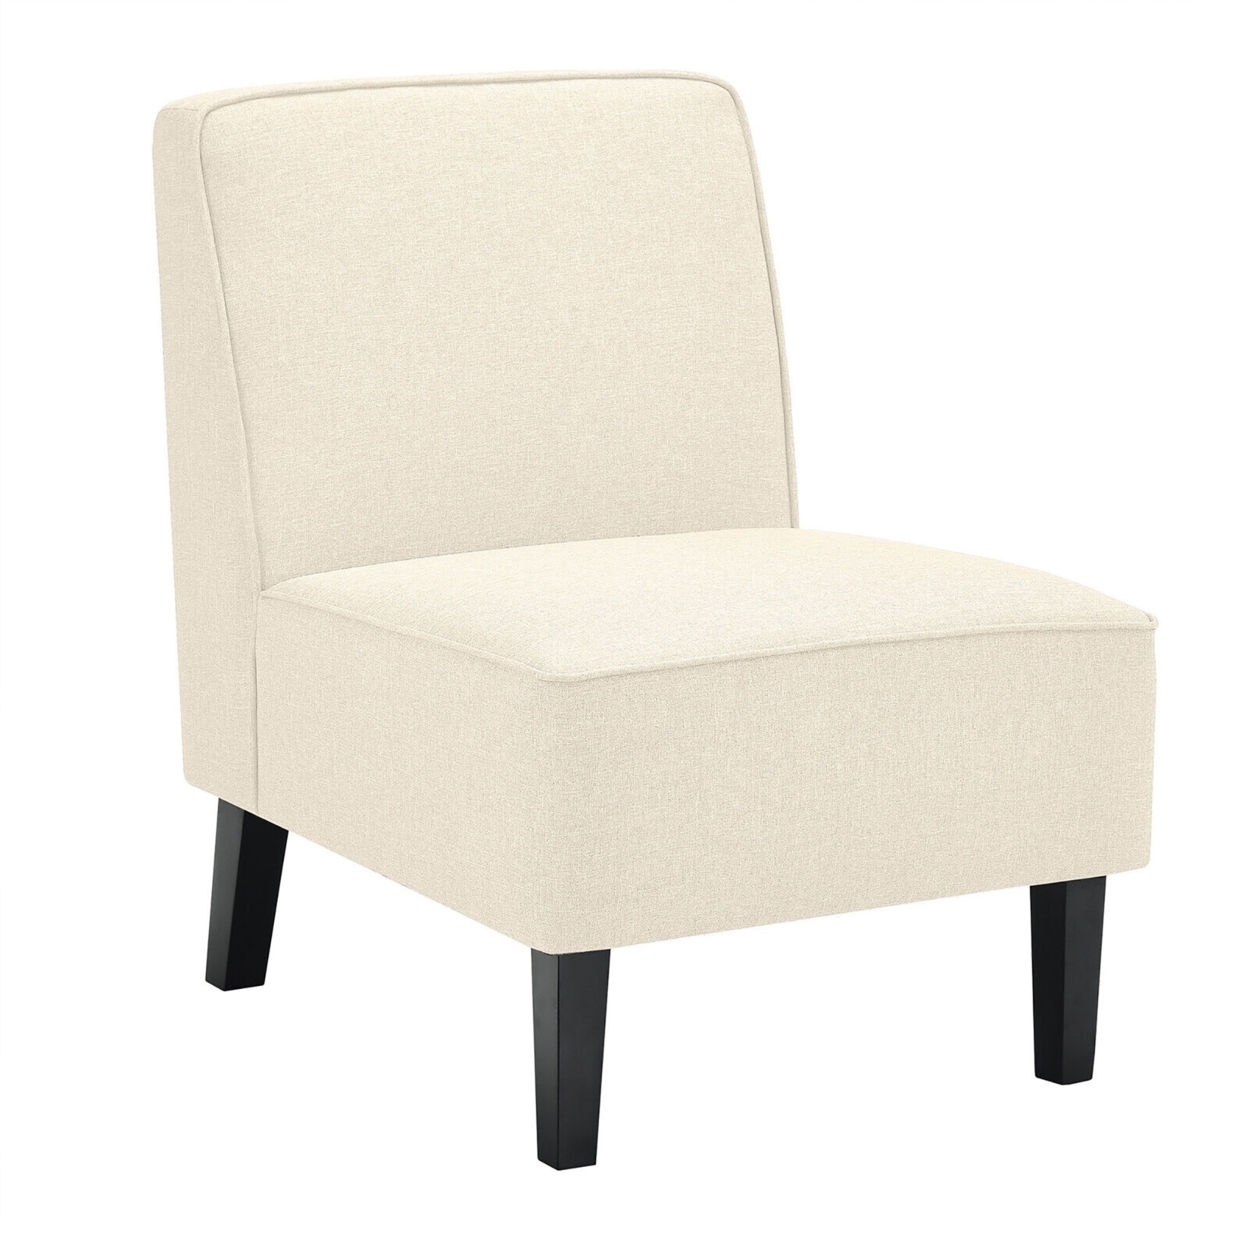 Modern Armless Accent Chair Fabric Single Sofa W/ Rubber Wood Legs Beige